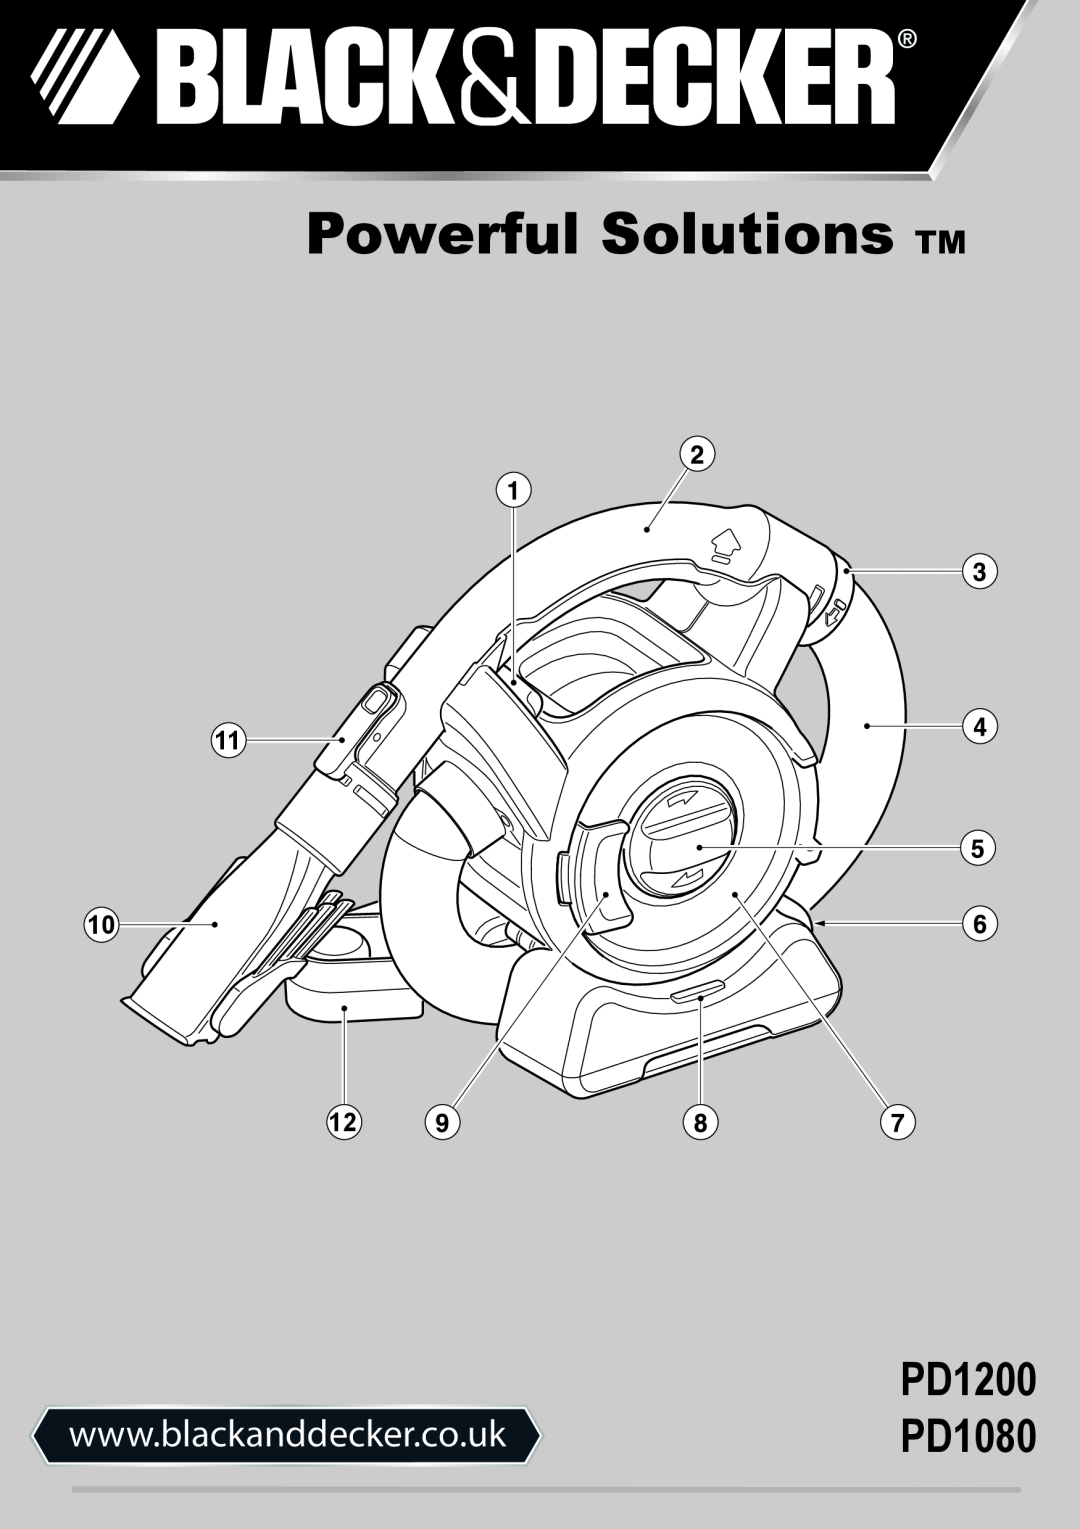 Black & Decker PD1080 manual Powerful Solutions TM, PD1200 